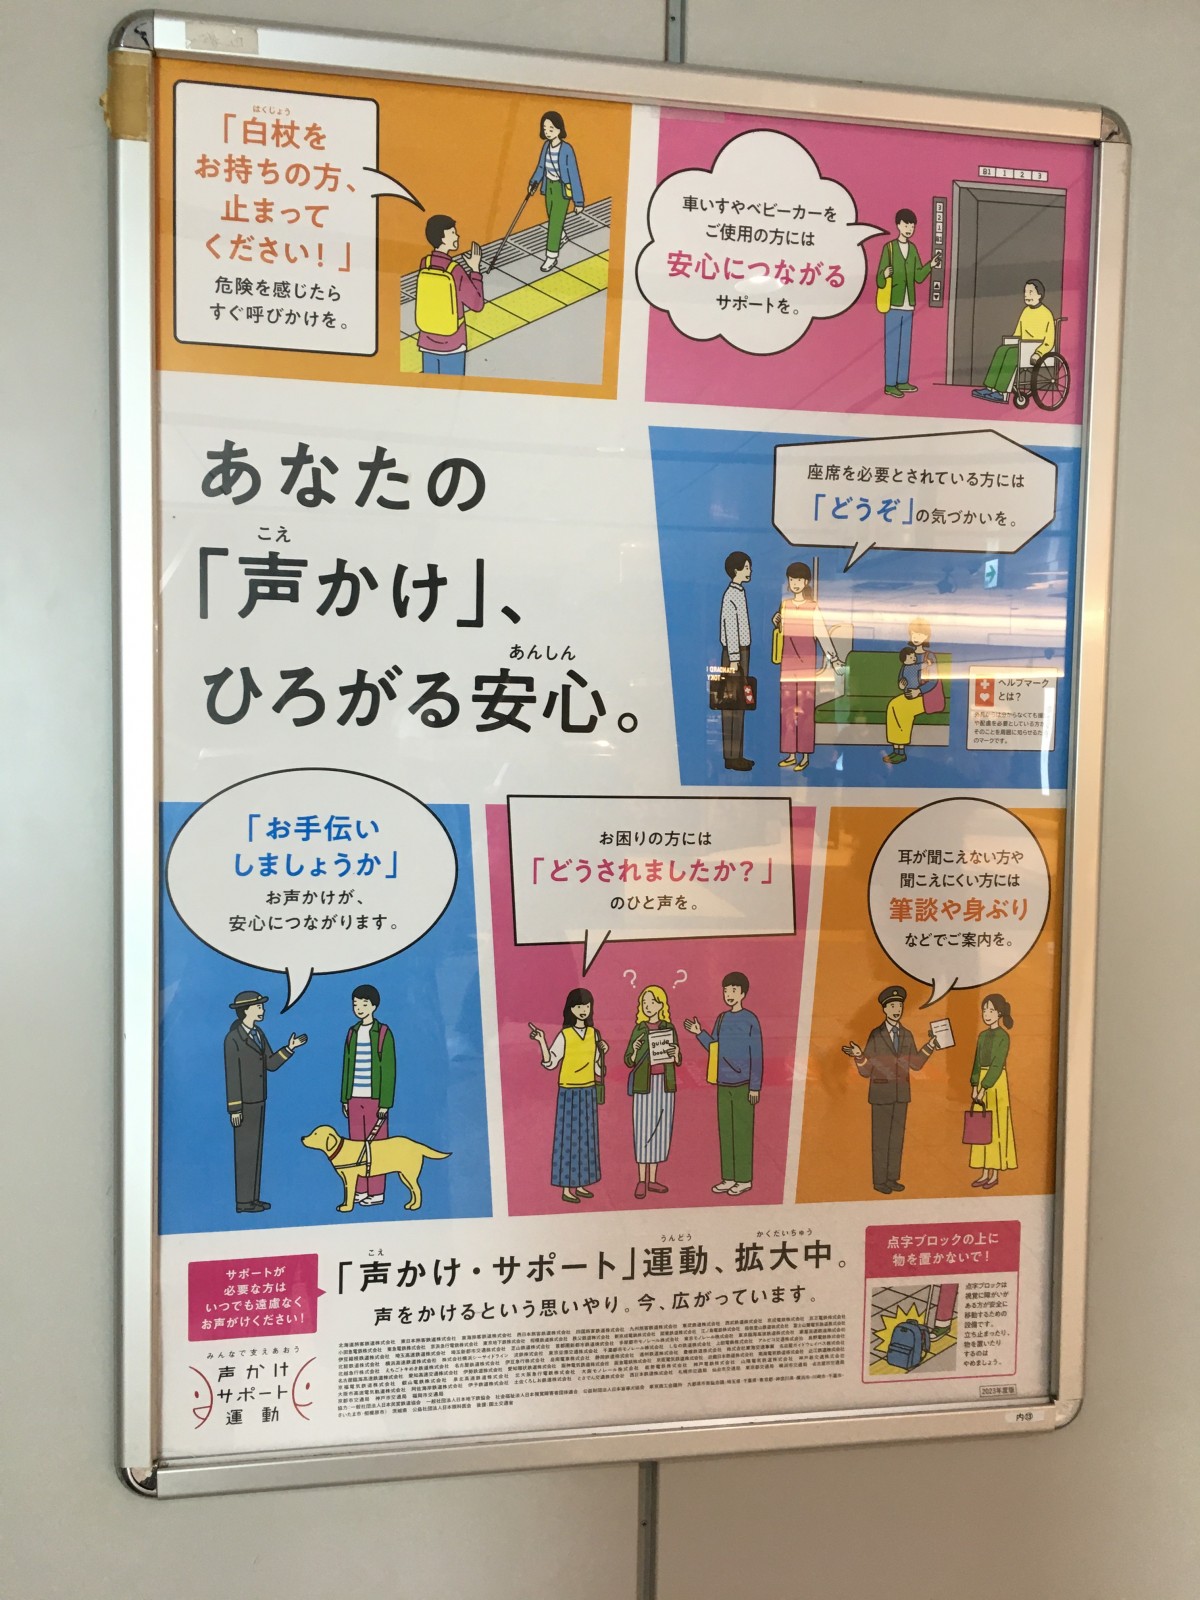 【JR東日本】「声かけ・サポート」運動 強化キャンペーンを交通事業者83社局と障害者団体を含む8団体で連携して実施